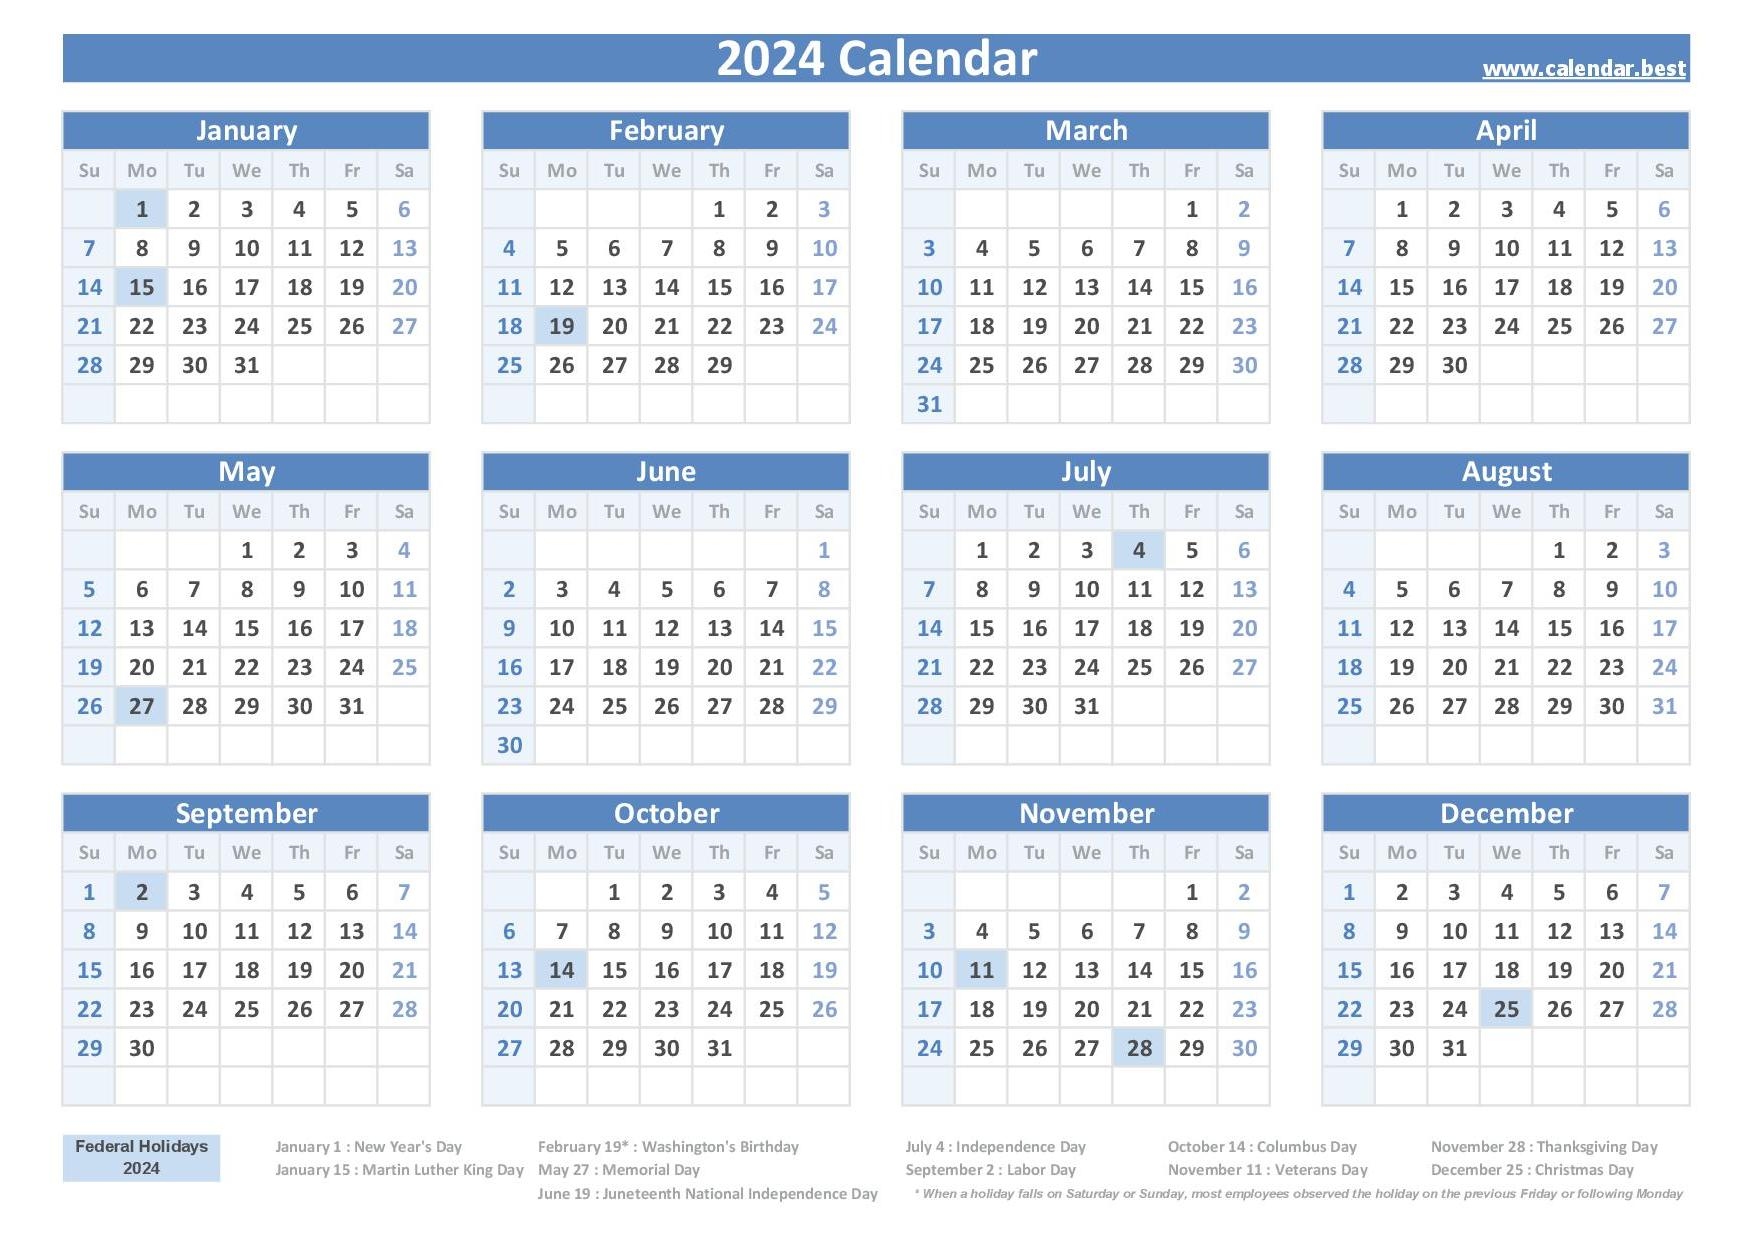 2024 Us Federal Holiday Calendar Printable Bill Marjie - Free Printable 2024 Calendar With Holidays Templates